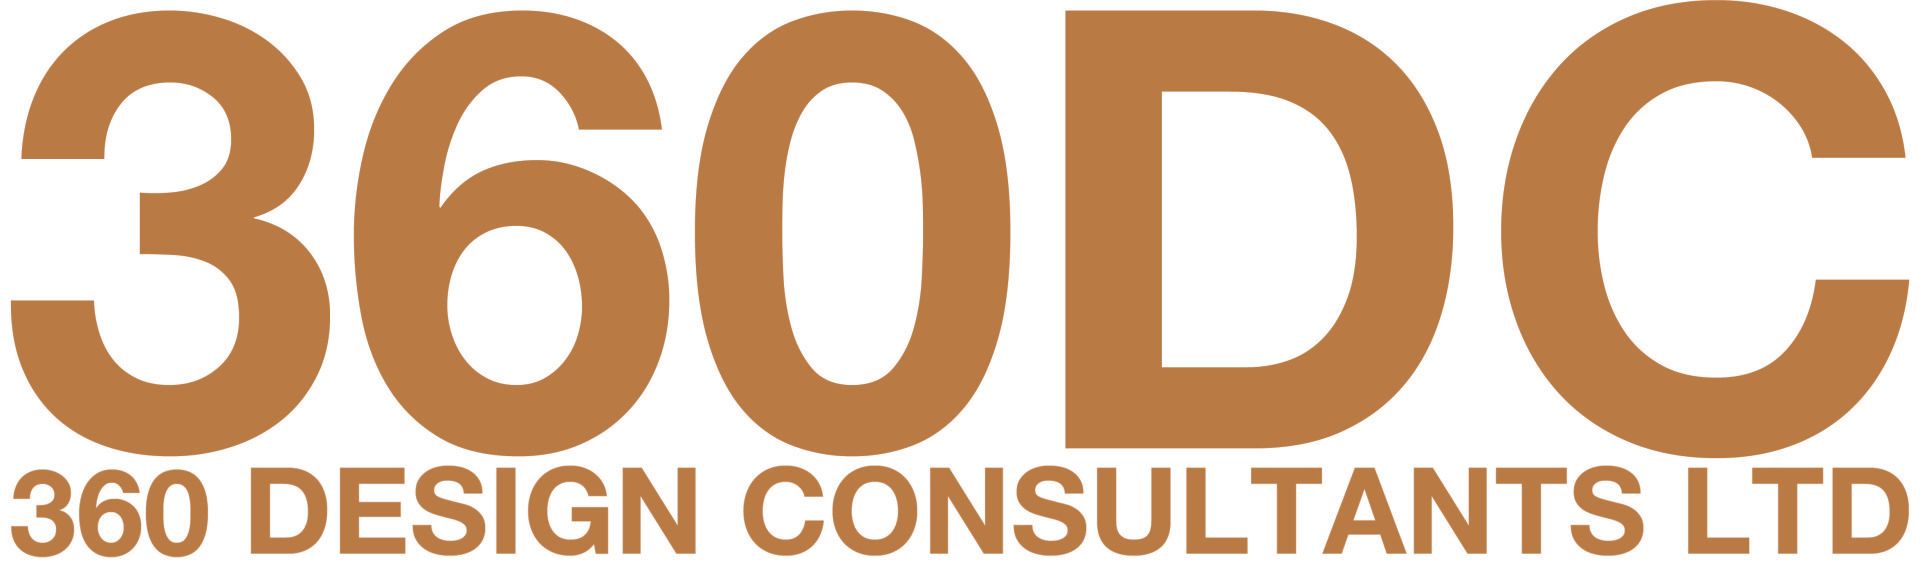 a logo for 360 dc design consultants ltd